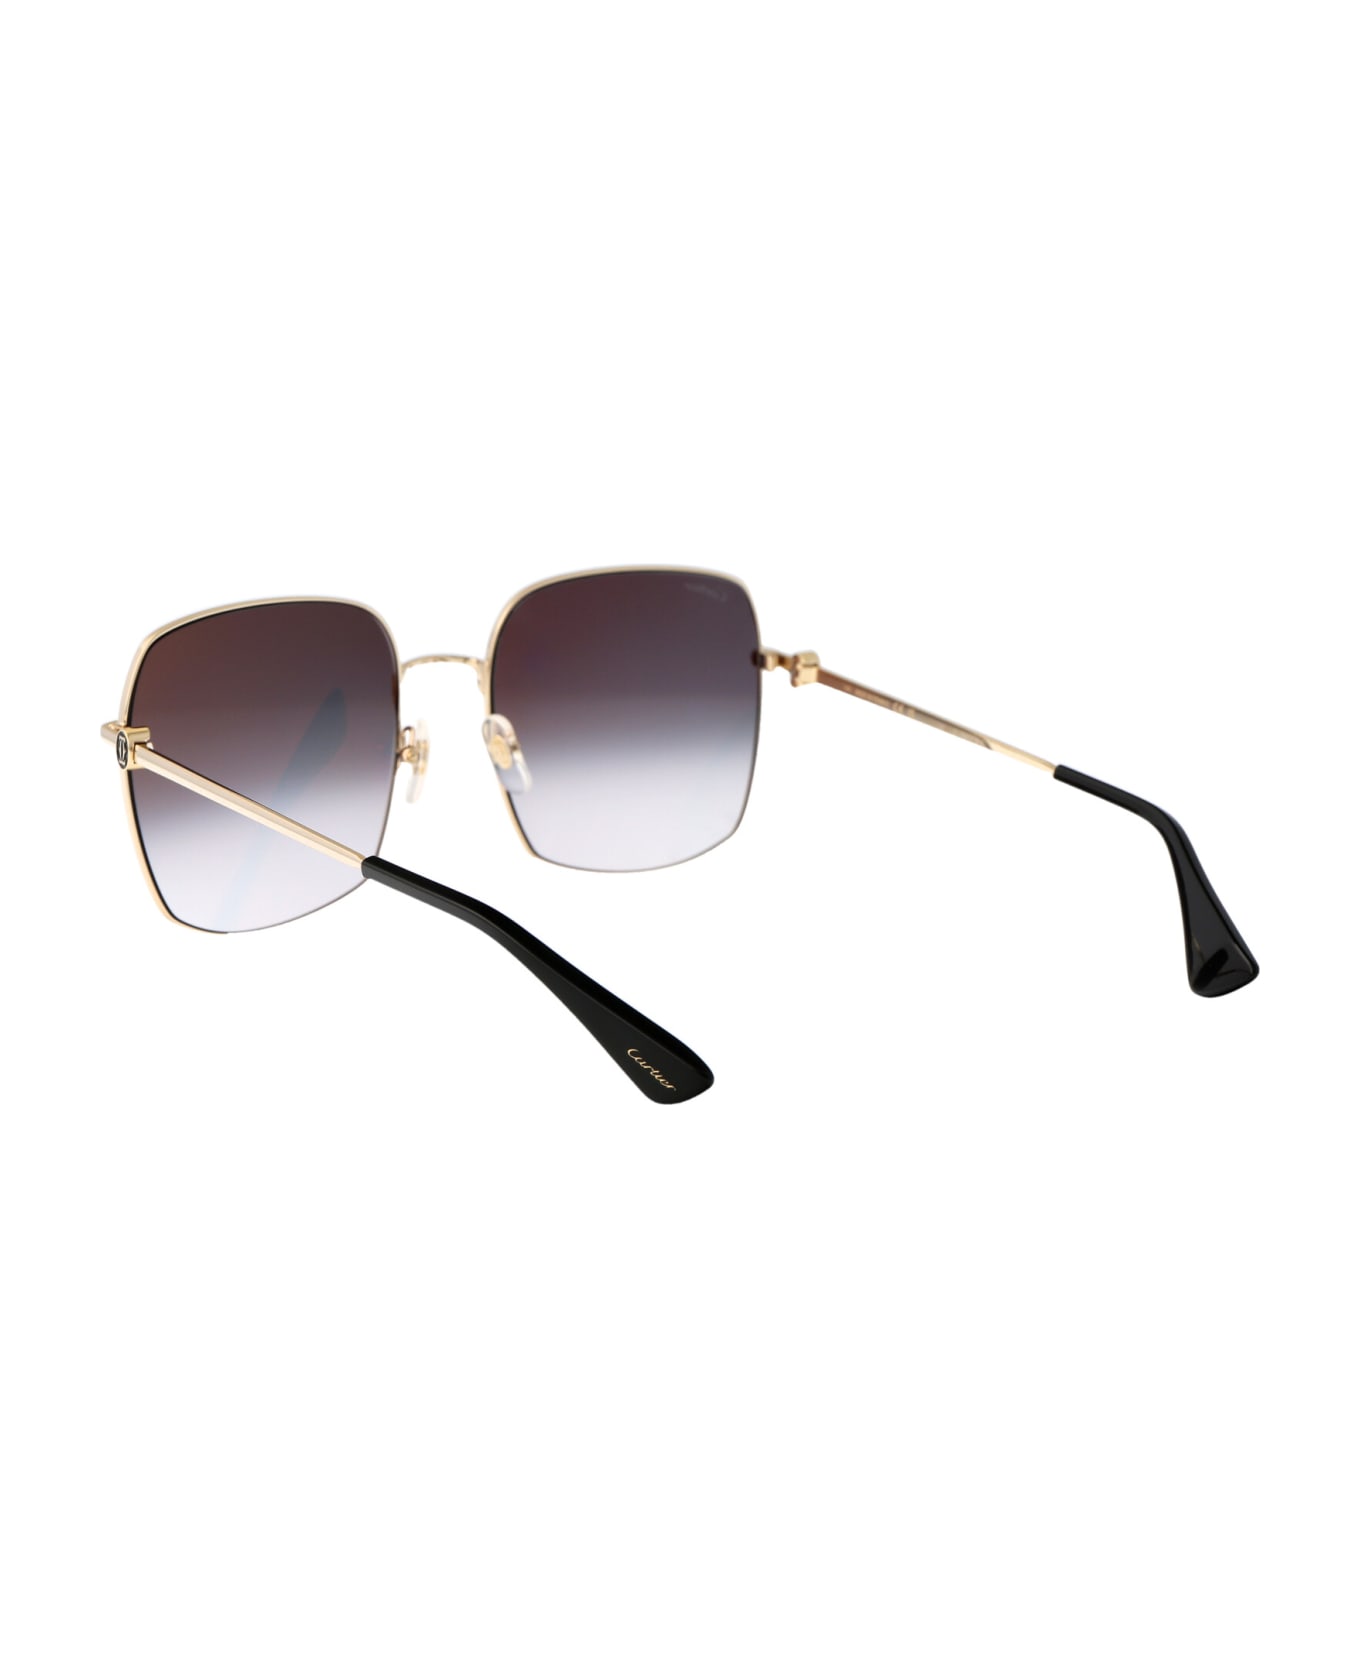 Cartier Eyewear Ct0401s Sunglasses - 001 GOLD GOLD GREY サングラス